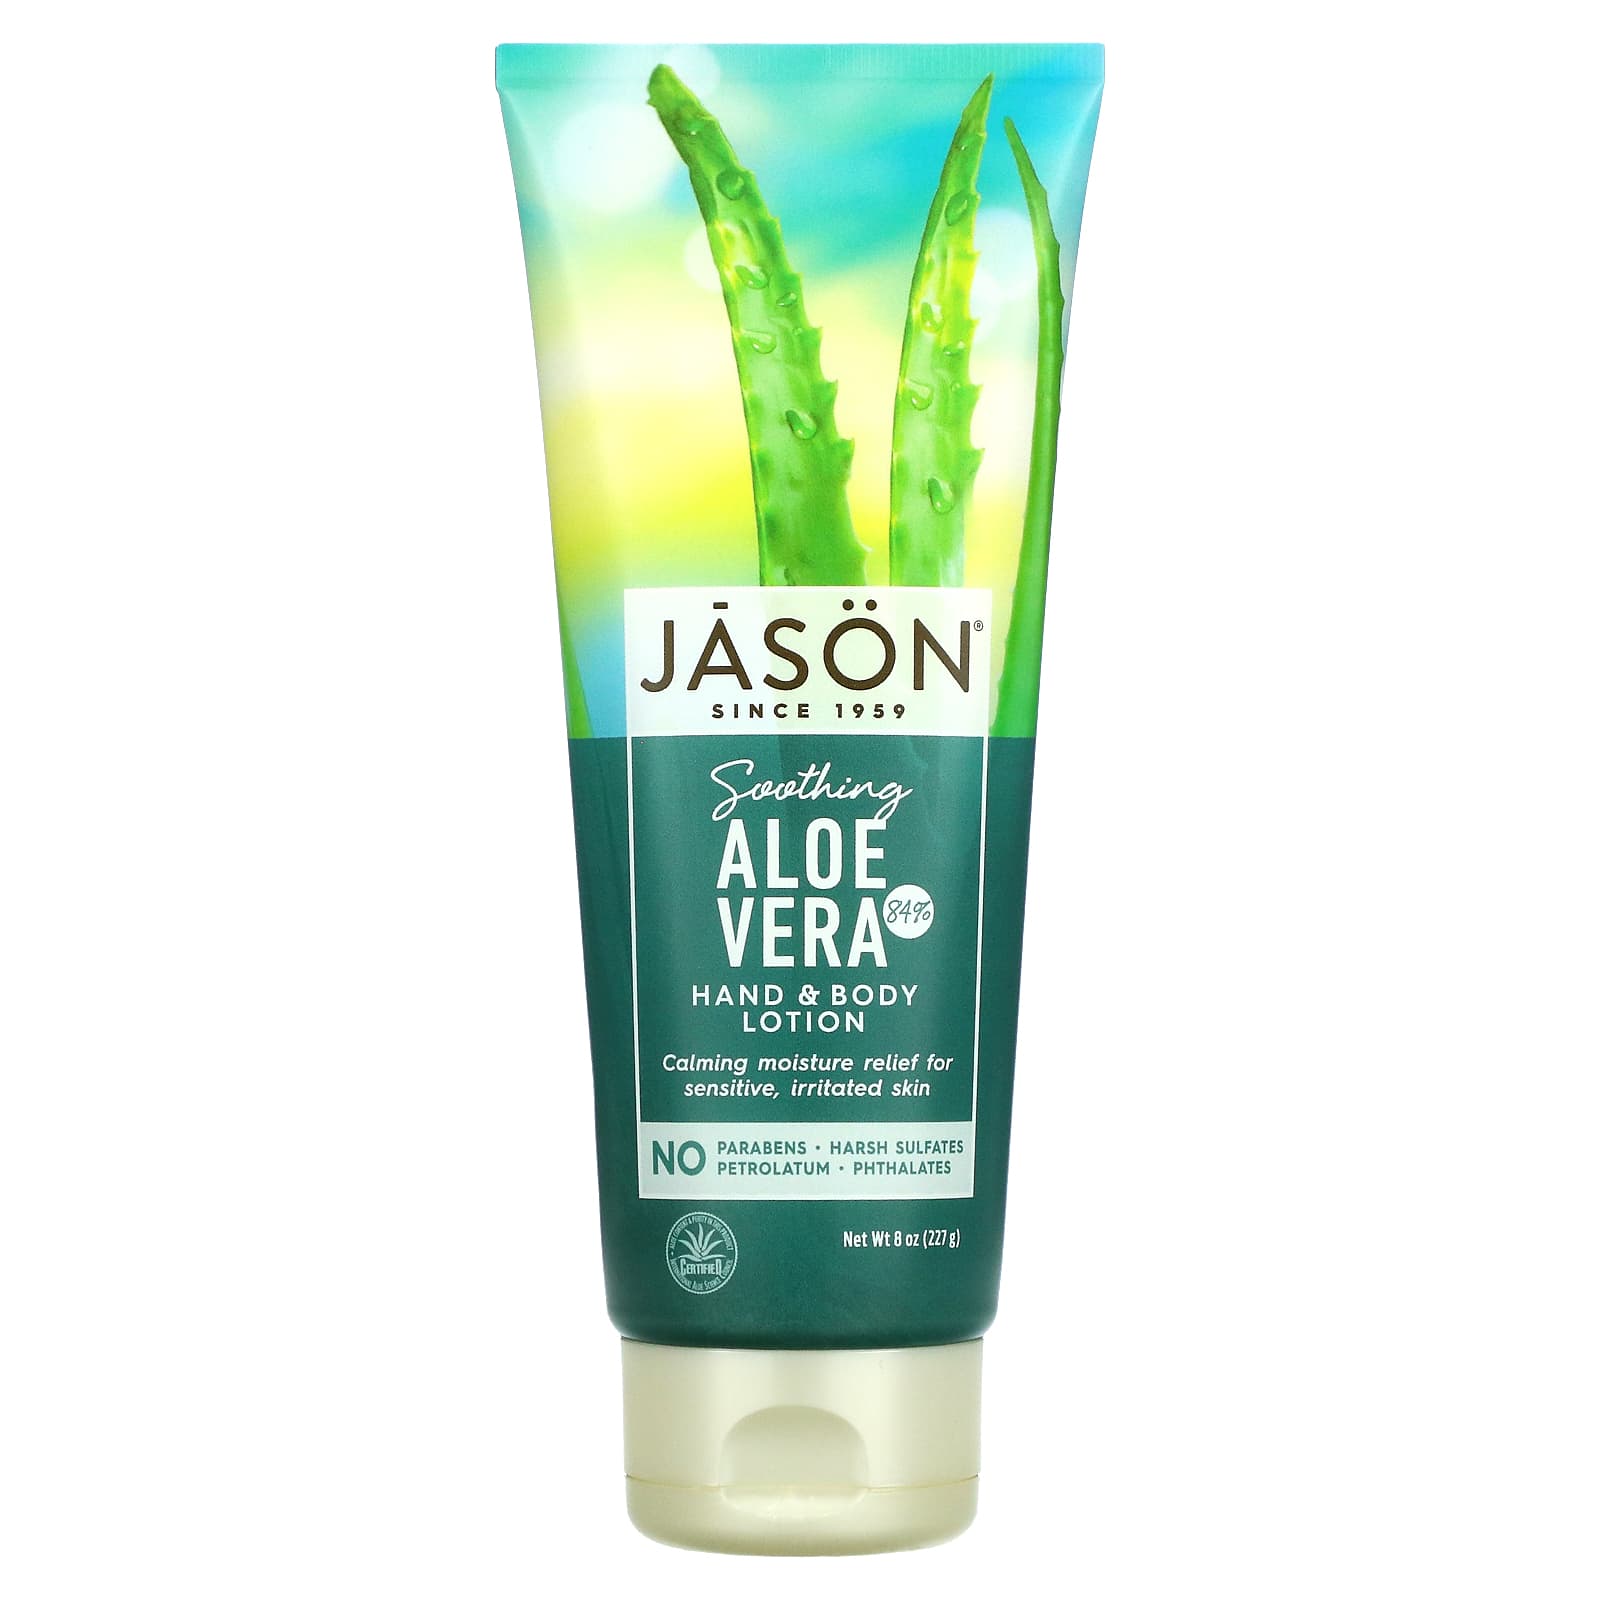 Kwadrant dichters Gevangene Jason Natural, Soothing Aloe Vera 84% Hand & Body Lotion, 8 oz (227 g)